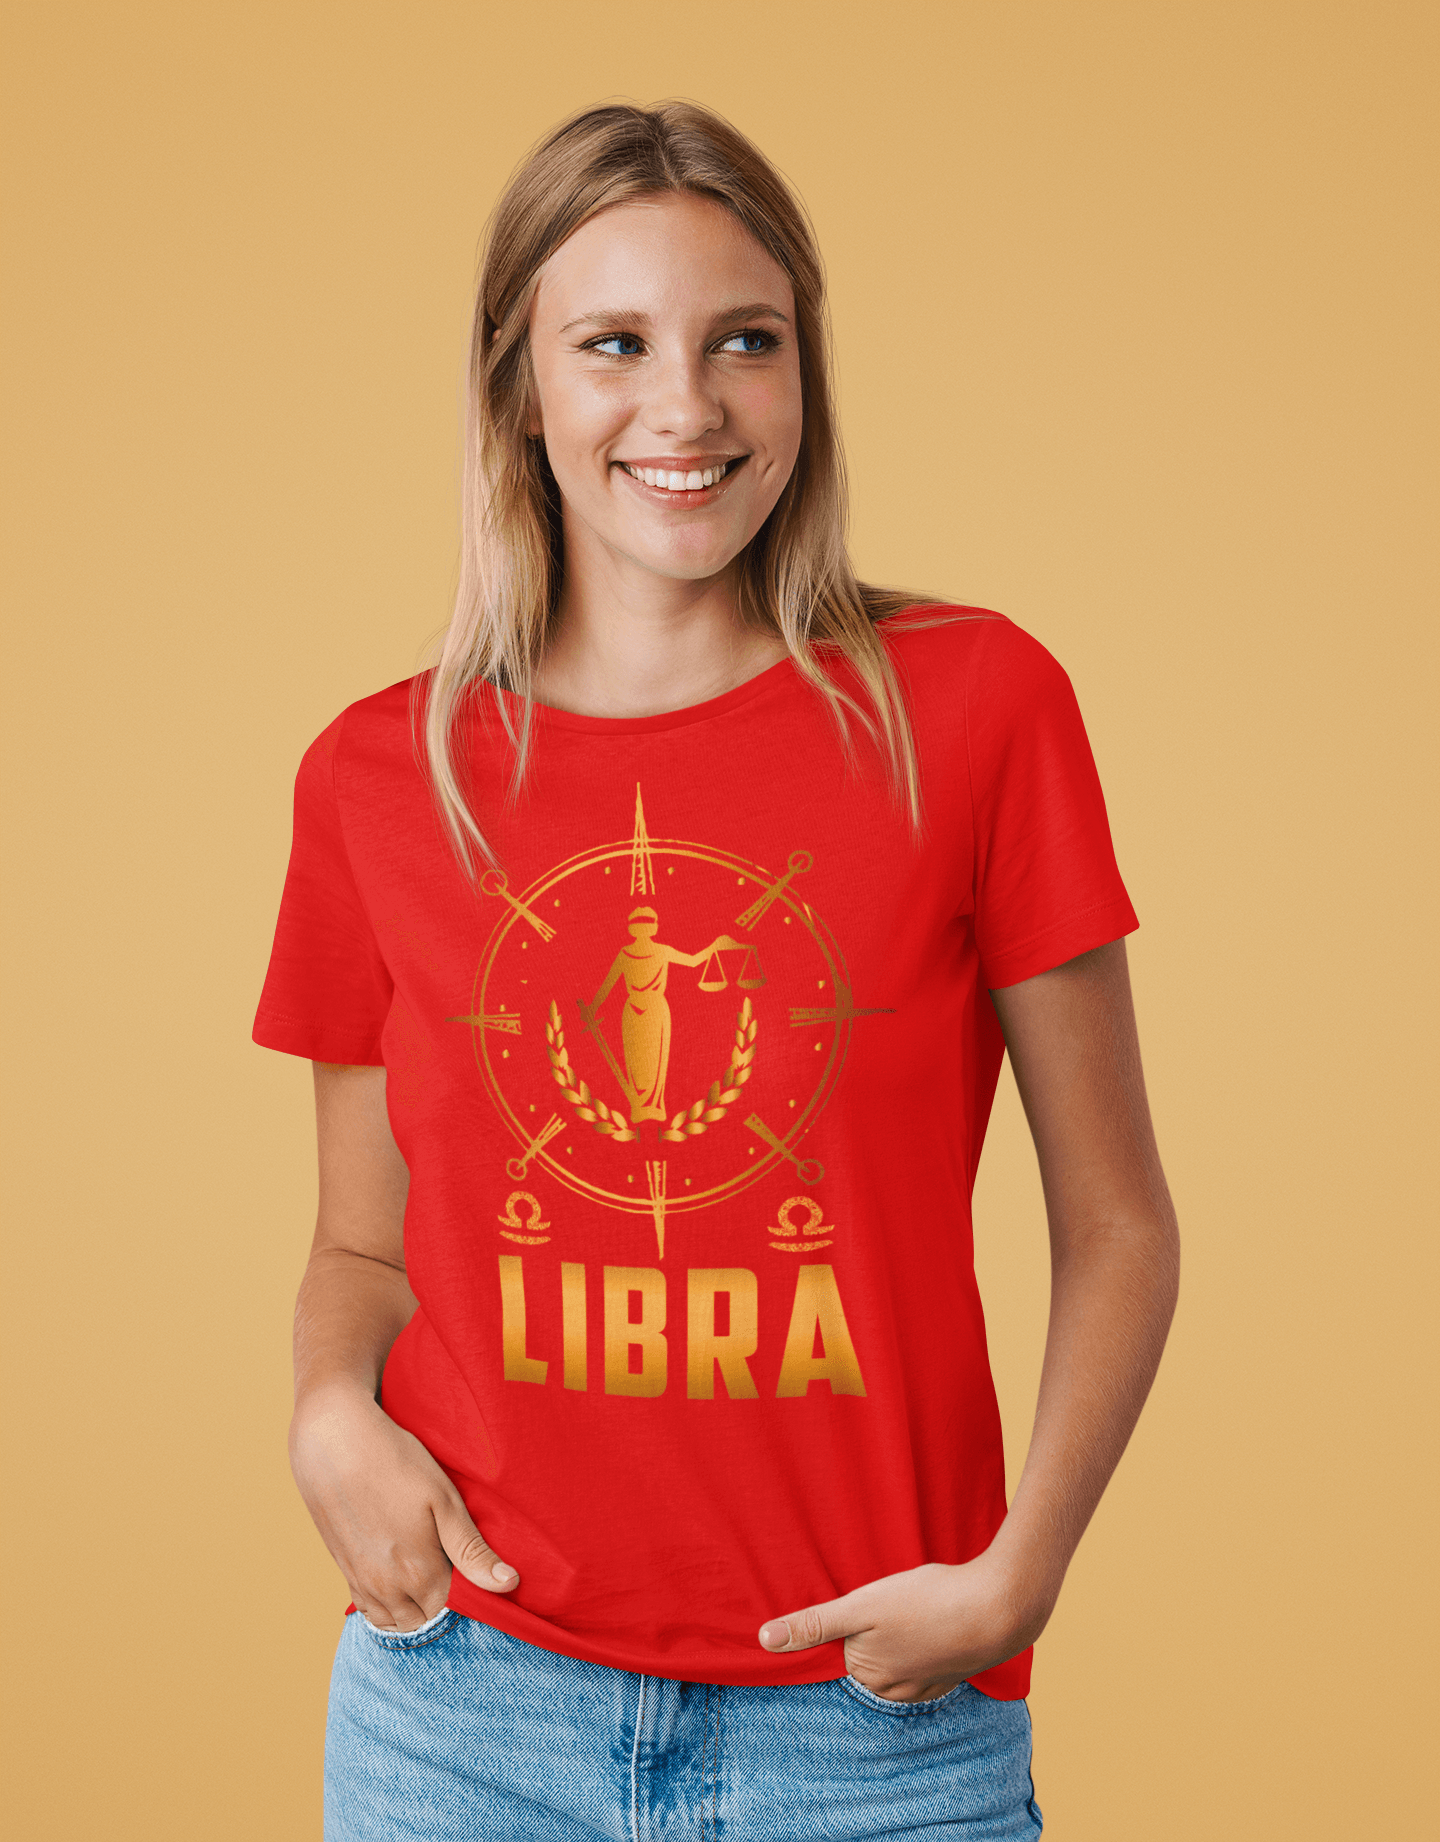 Libra Red T-Shirt For Women - ATOM